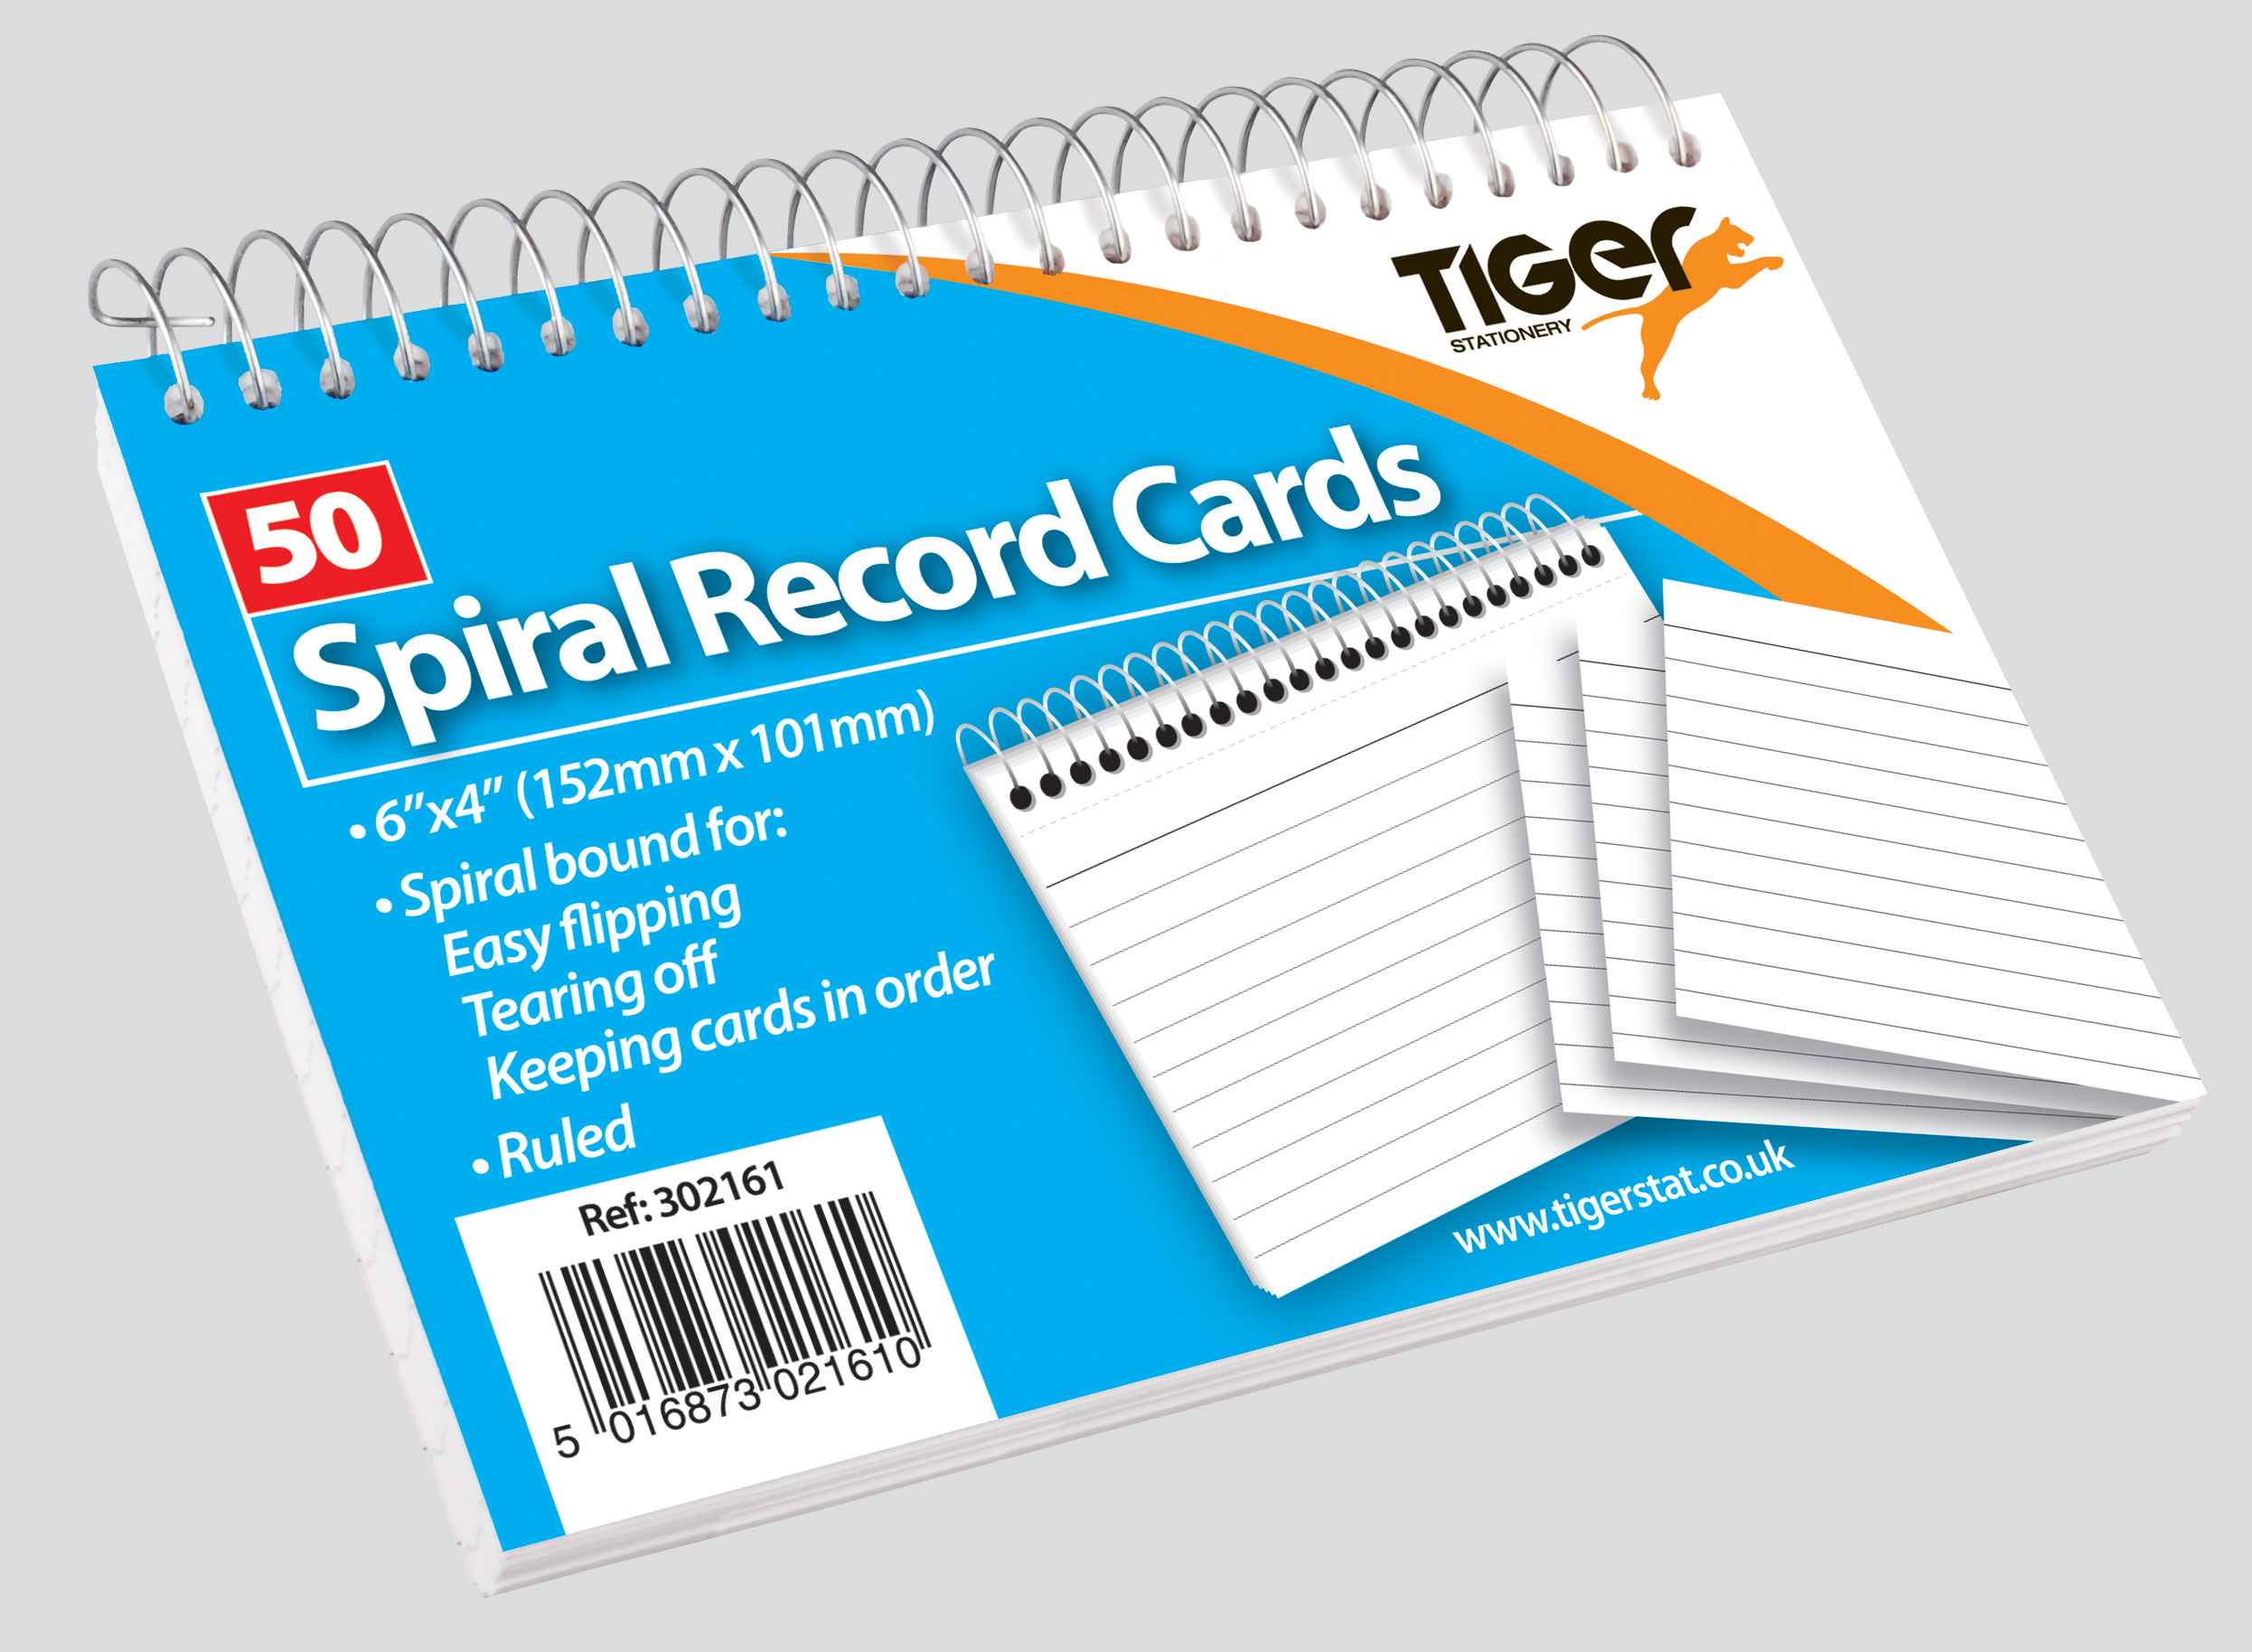 Tiger - Spiral record cards